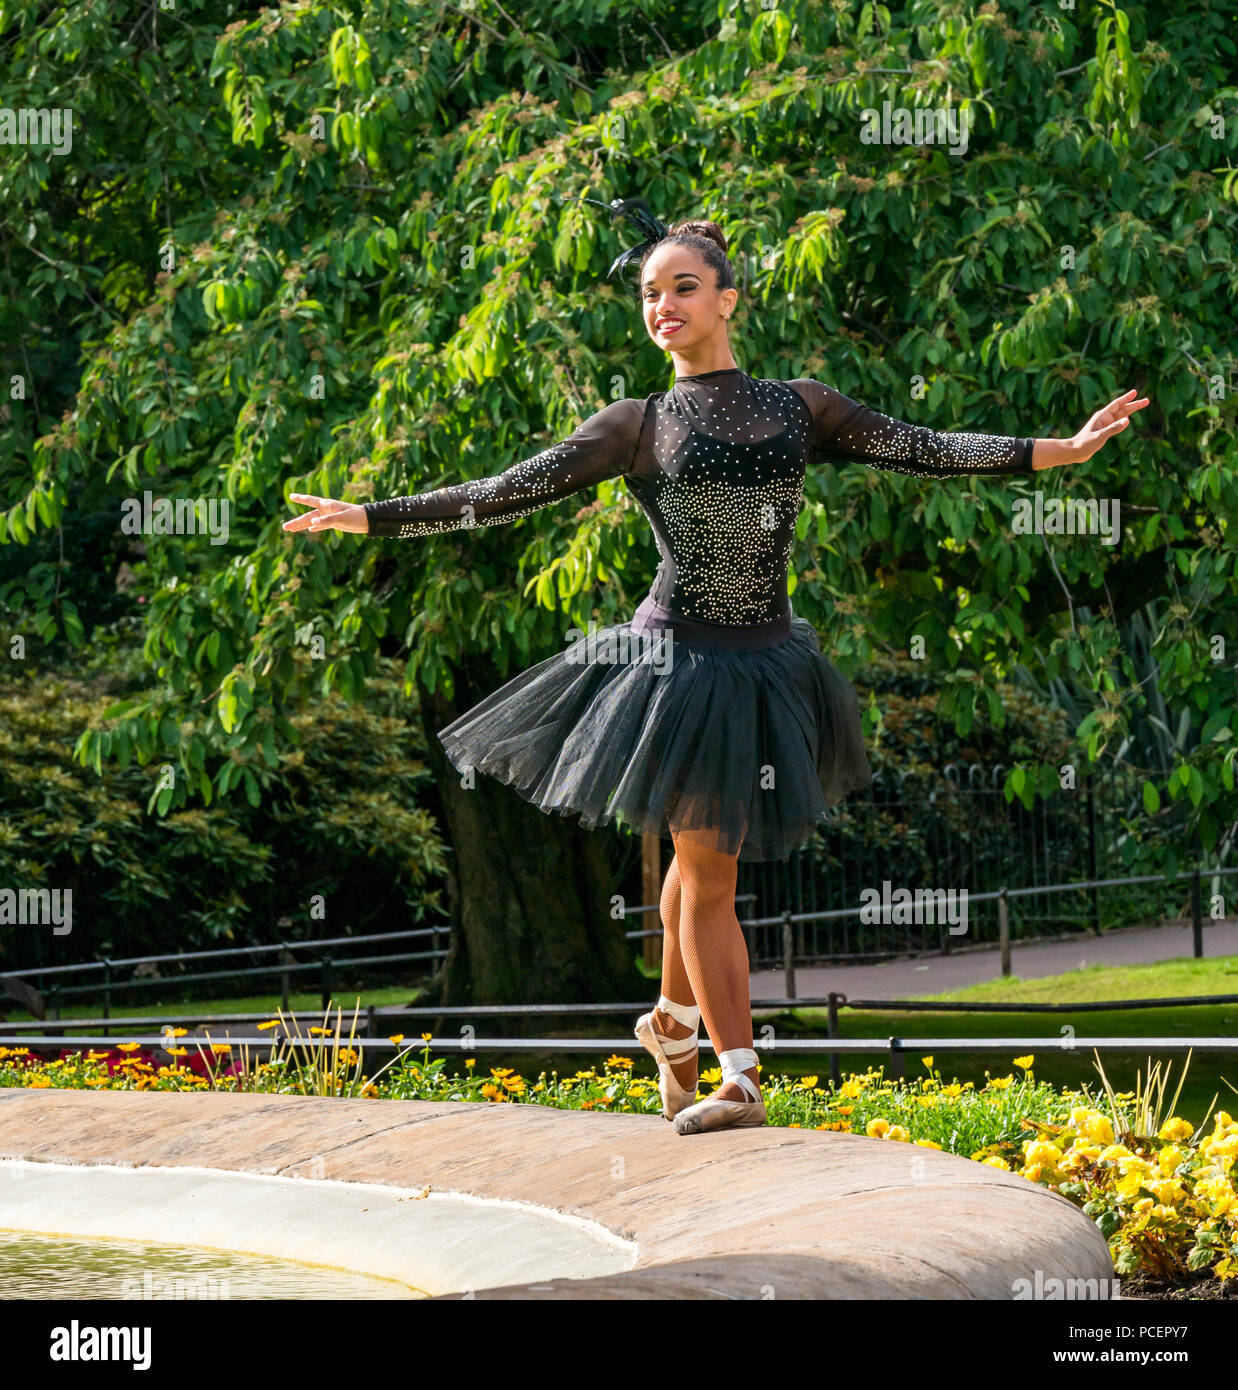 Photocall for Cuban ballerina Beatriz Torres Cuellar of UniverSoul Circus,  Princes Street Gardens, Edinburgh, Scotland, UK during Fringe Festival  Stock Photo - Alamy